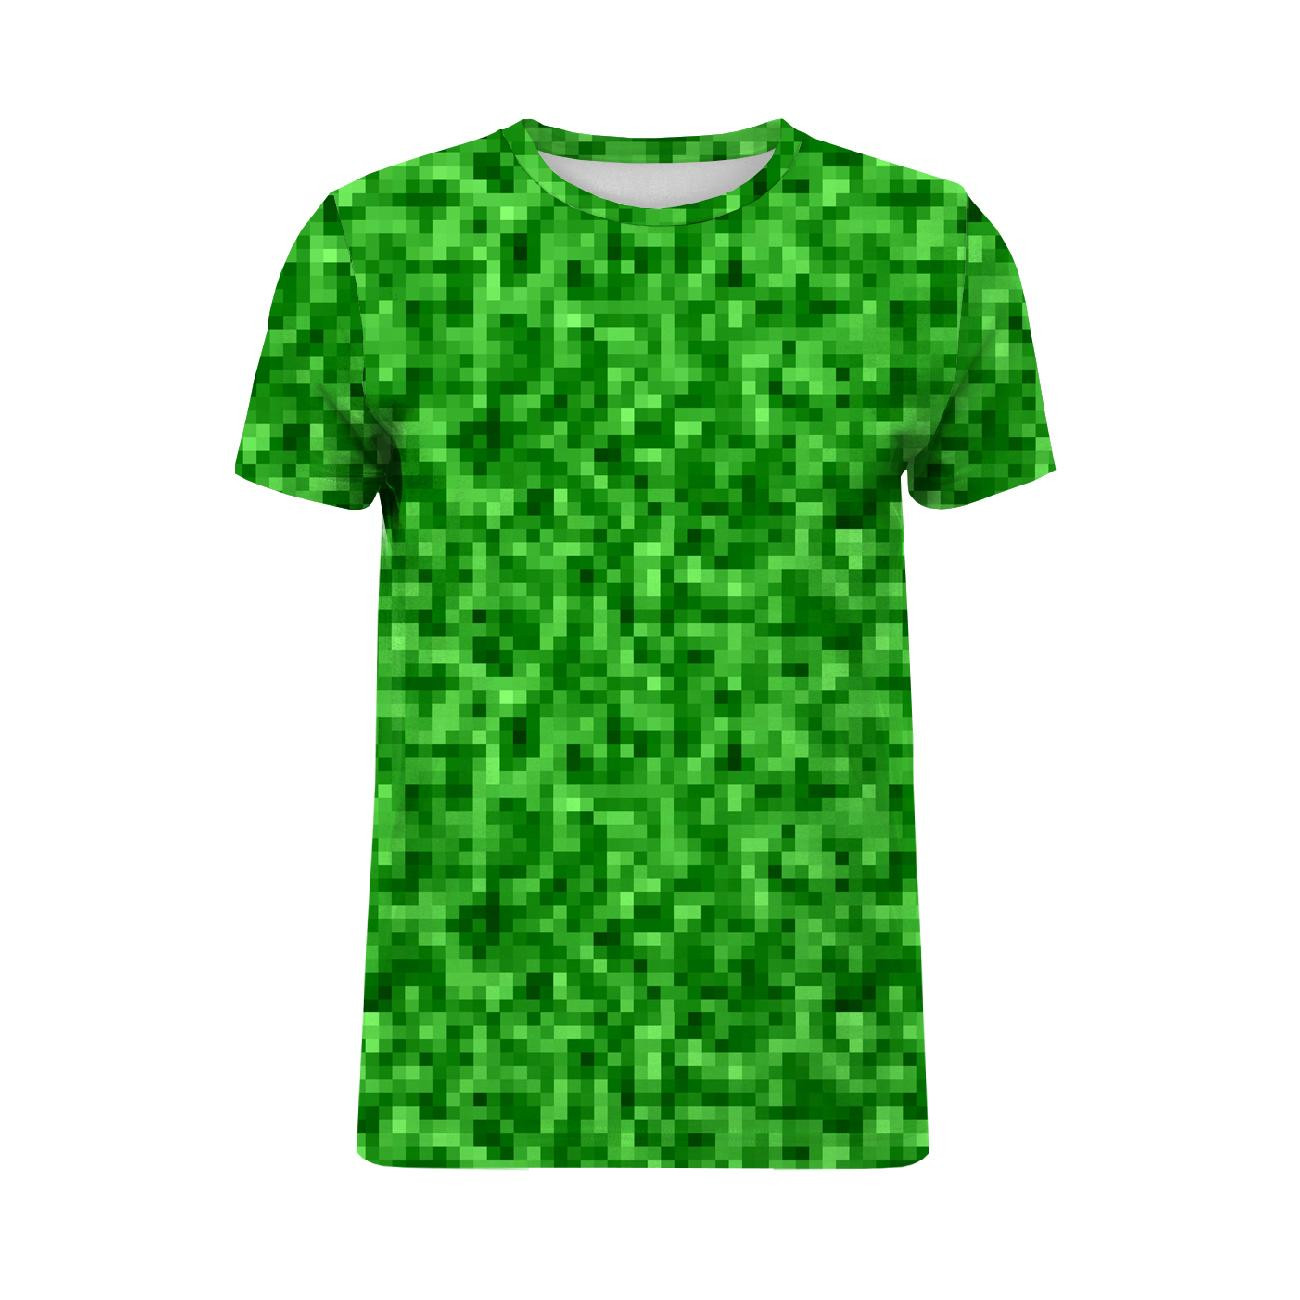 MEN’S T-SHIRT - PIXELS pat. 2 / green - single jersey